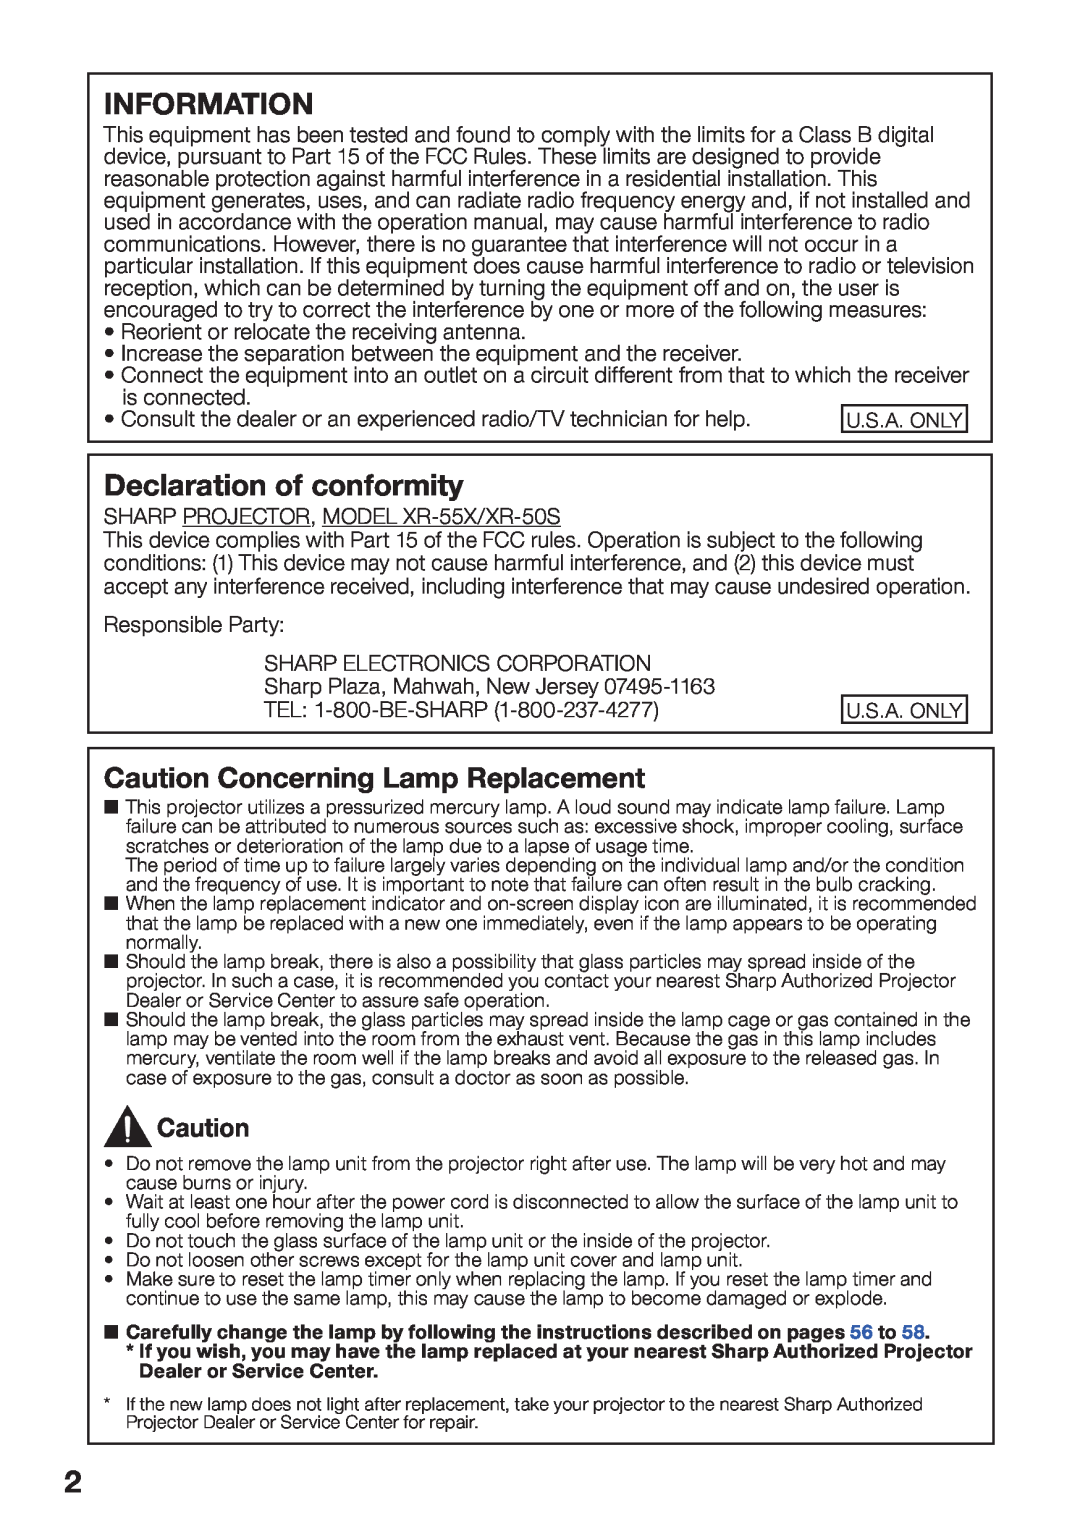 Sharp XR-55X, XR-50S appendix Information, Declaration of conformity, Caution Concerning Lamp Replacement 